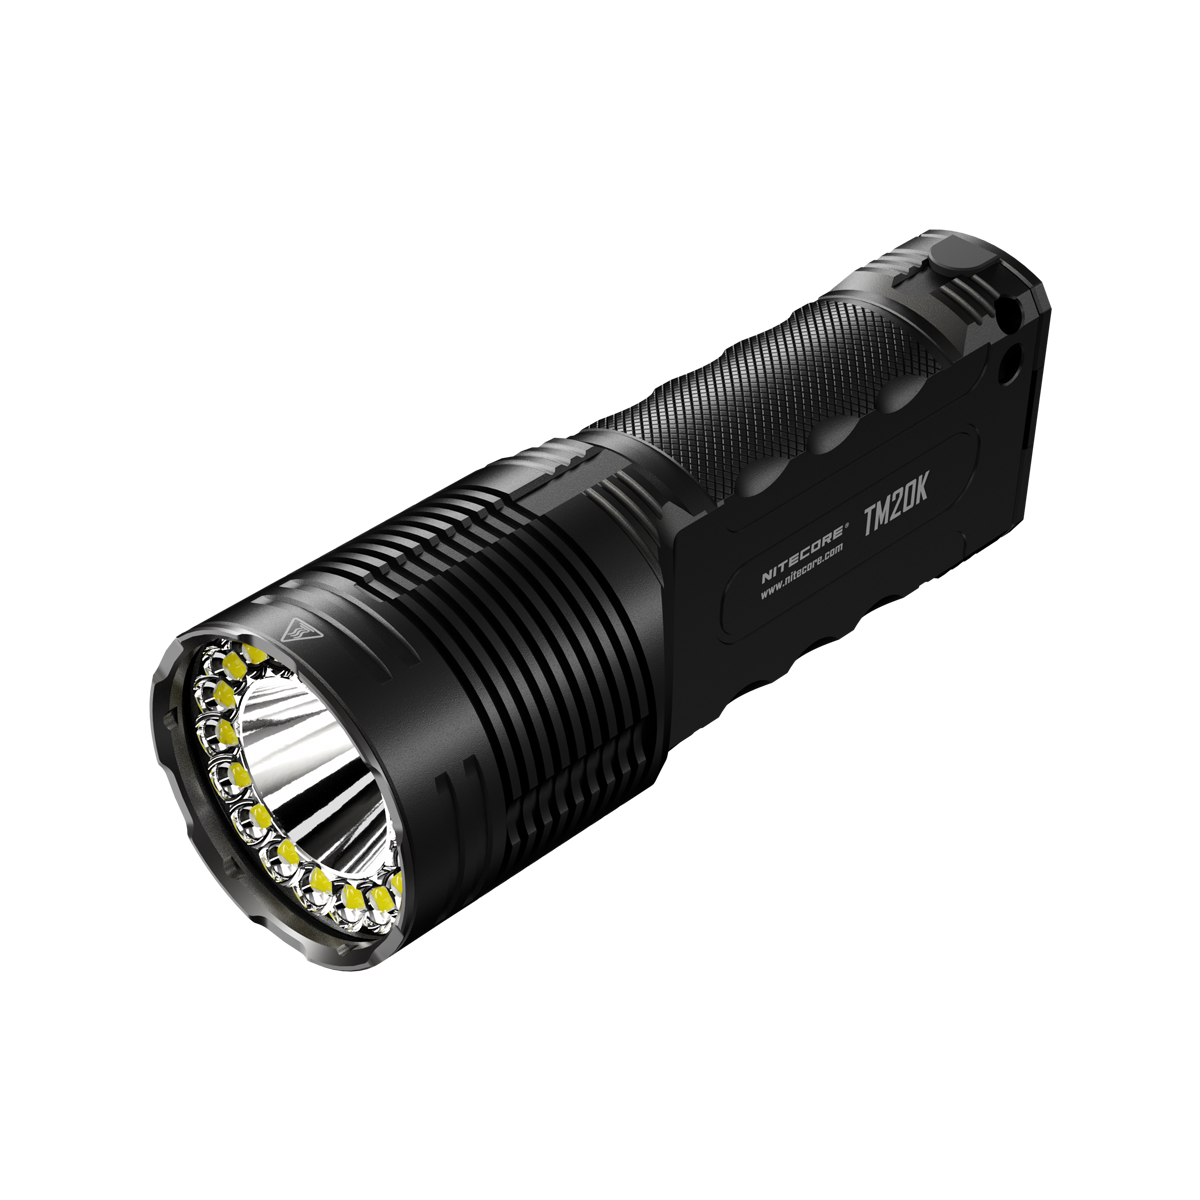 Nitecore TM20K 19 x  XPL HD LED 20000 Lumen Rechargeable Search Light